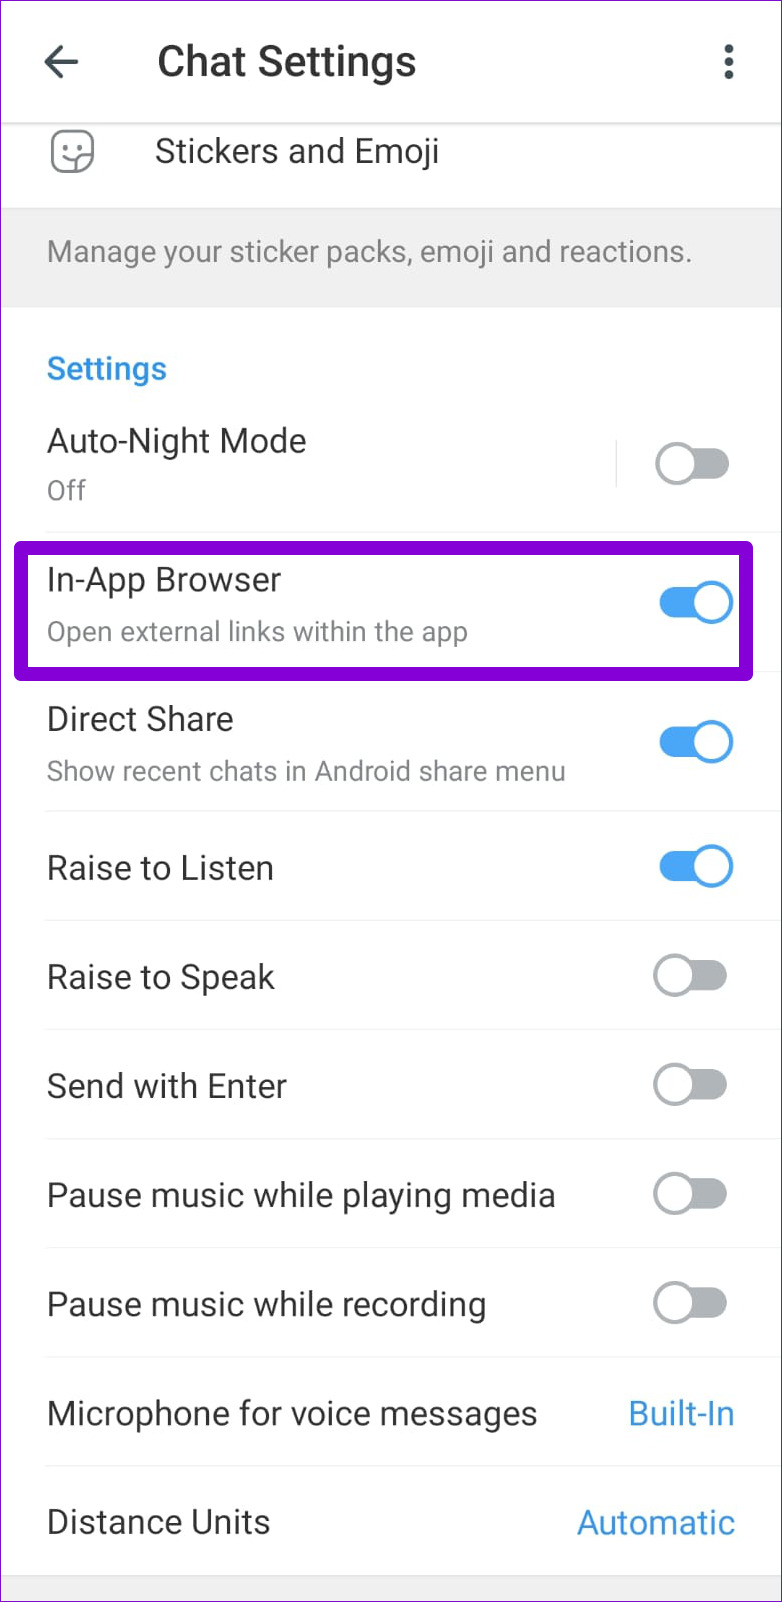 Enable or Disable In-App Browser in Telegram